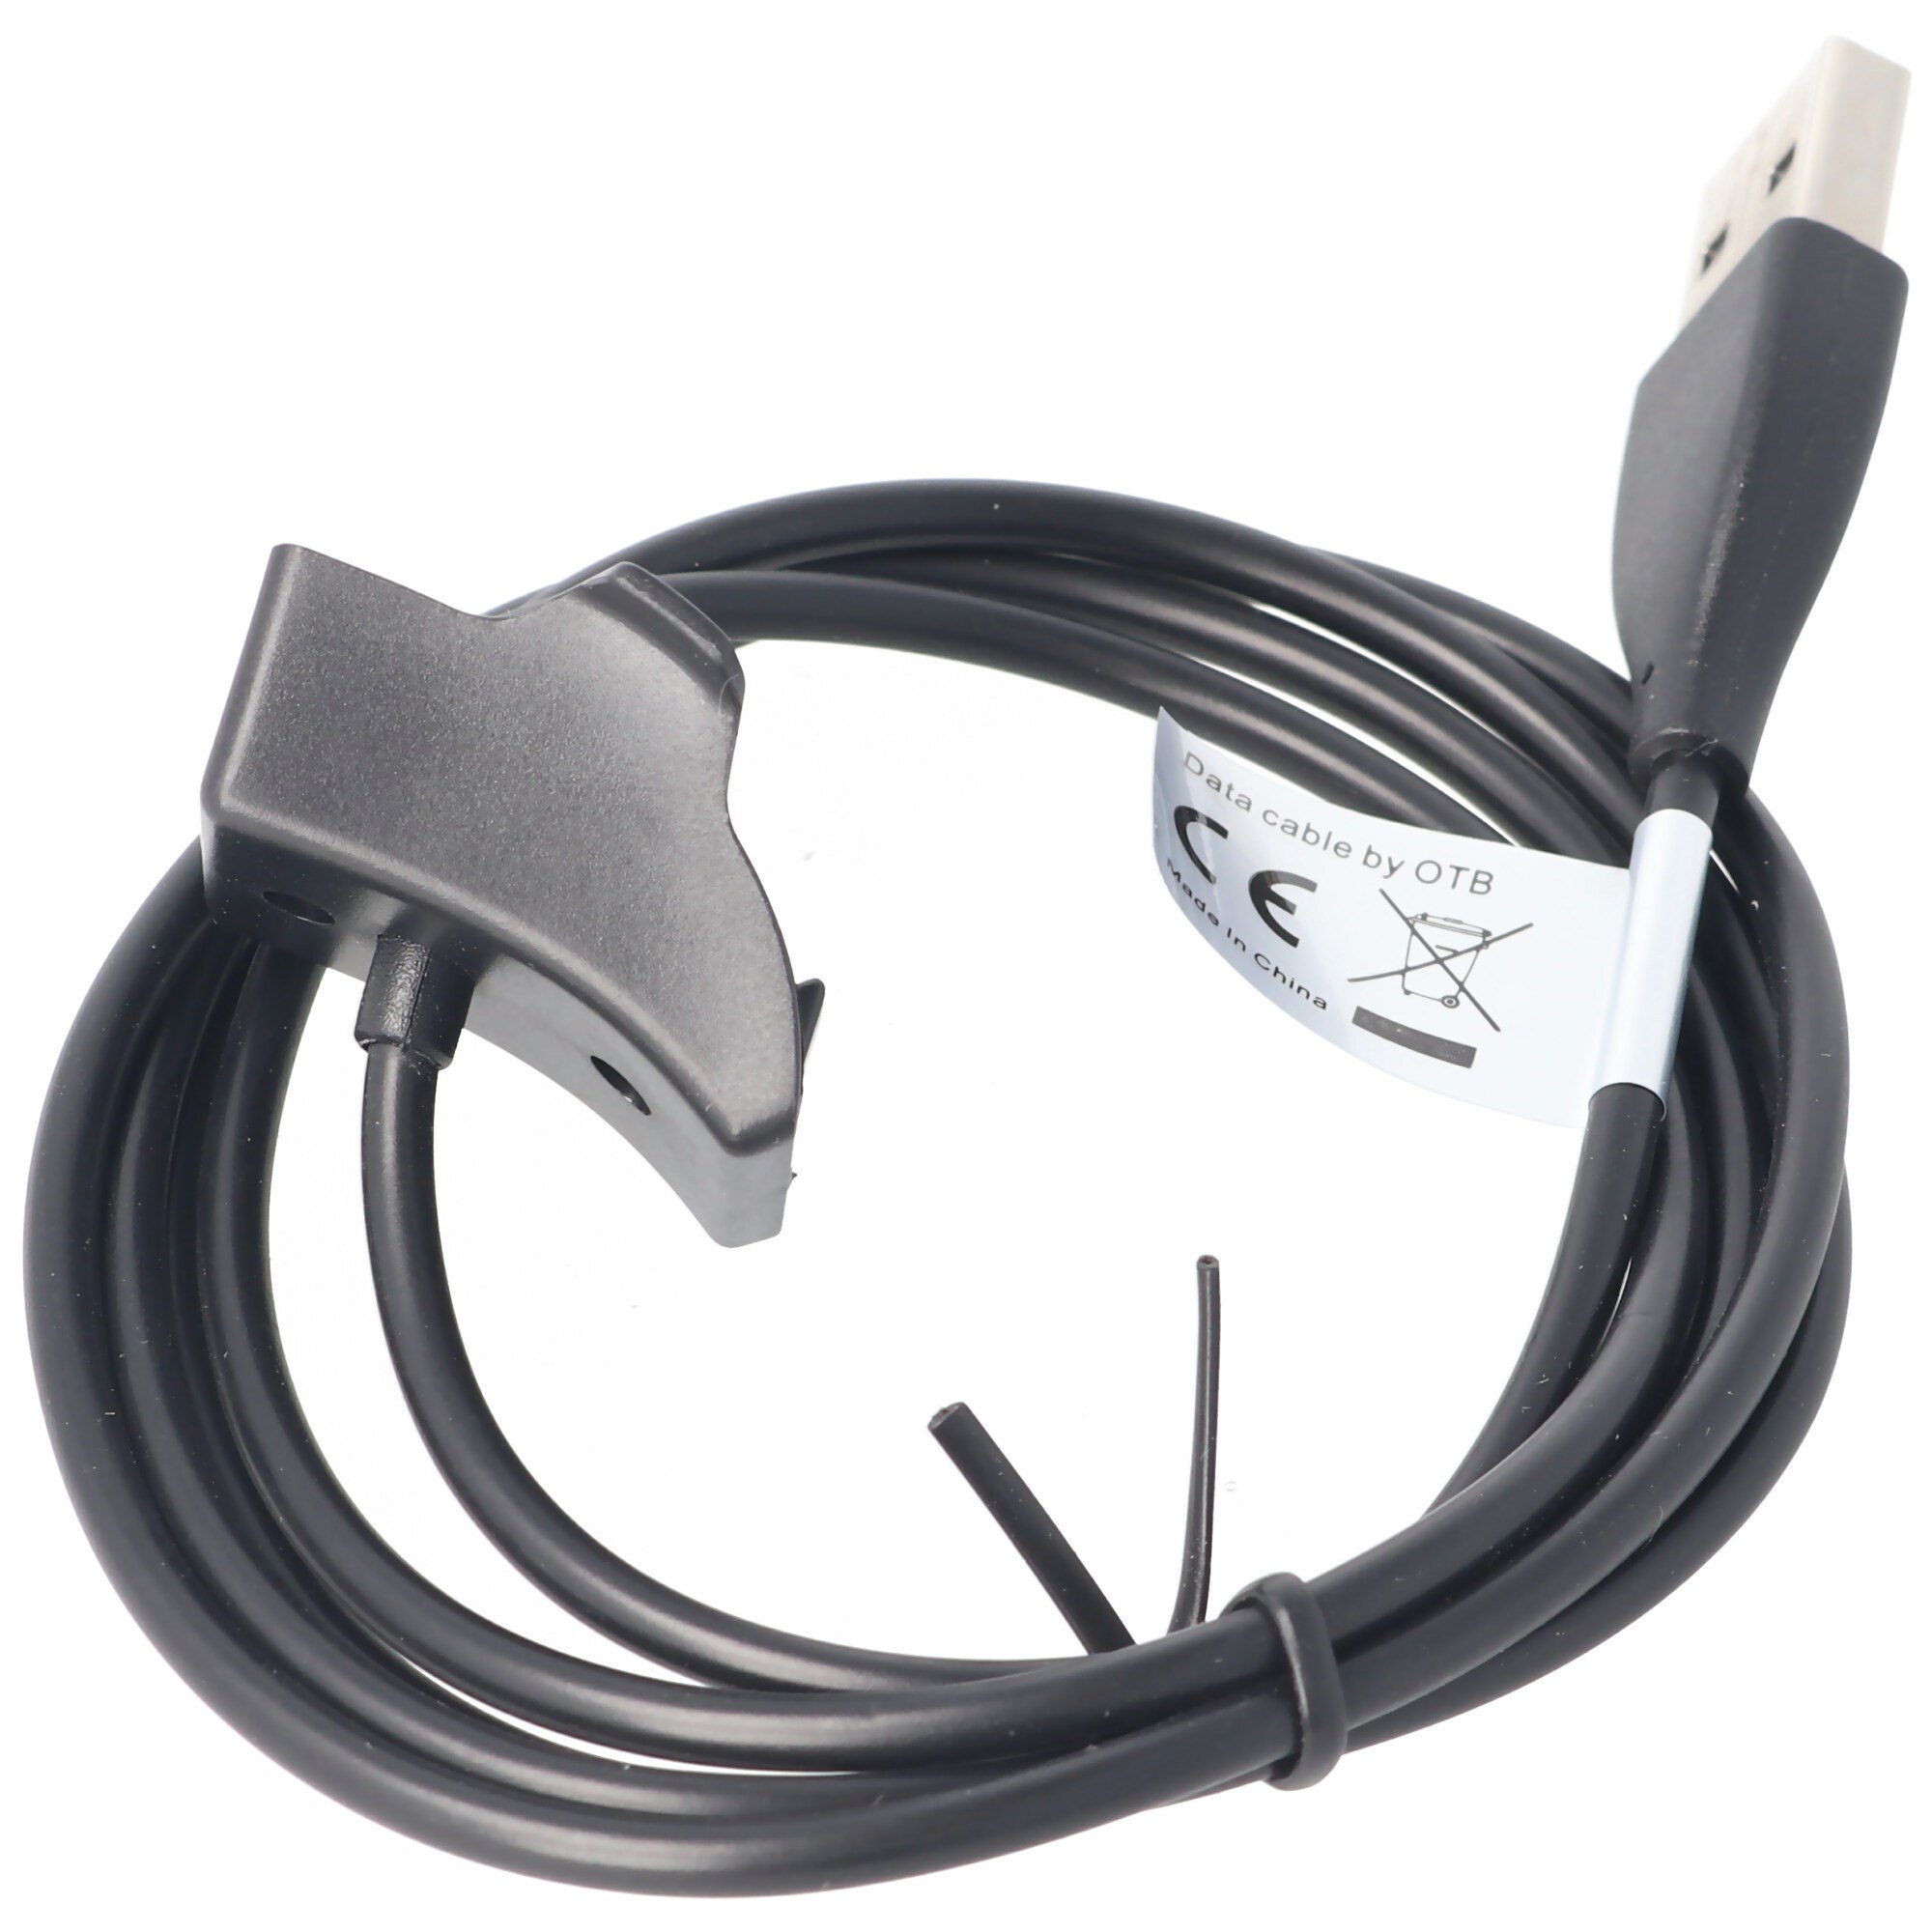 USB şarj kablosu Huawei Band 2 spor izci için uygun, Band 2 Pro, Huawei Band  3,